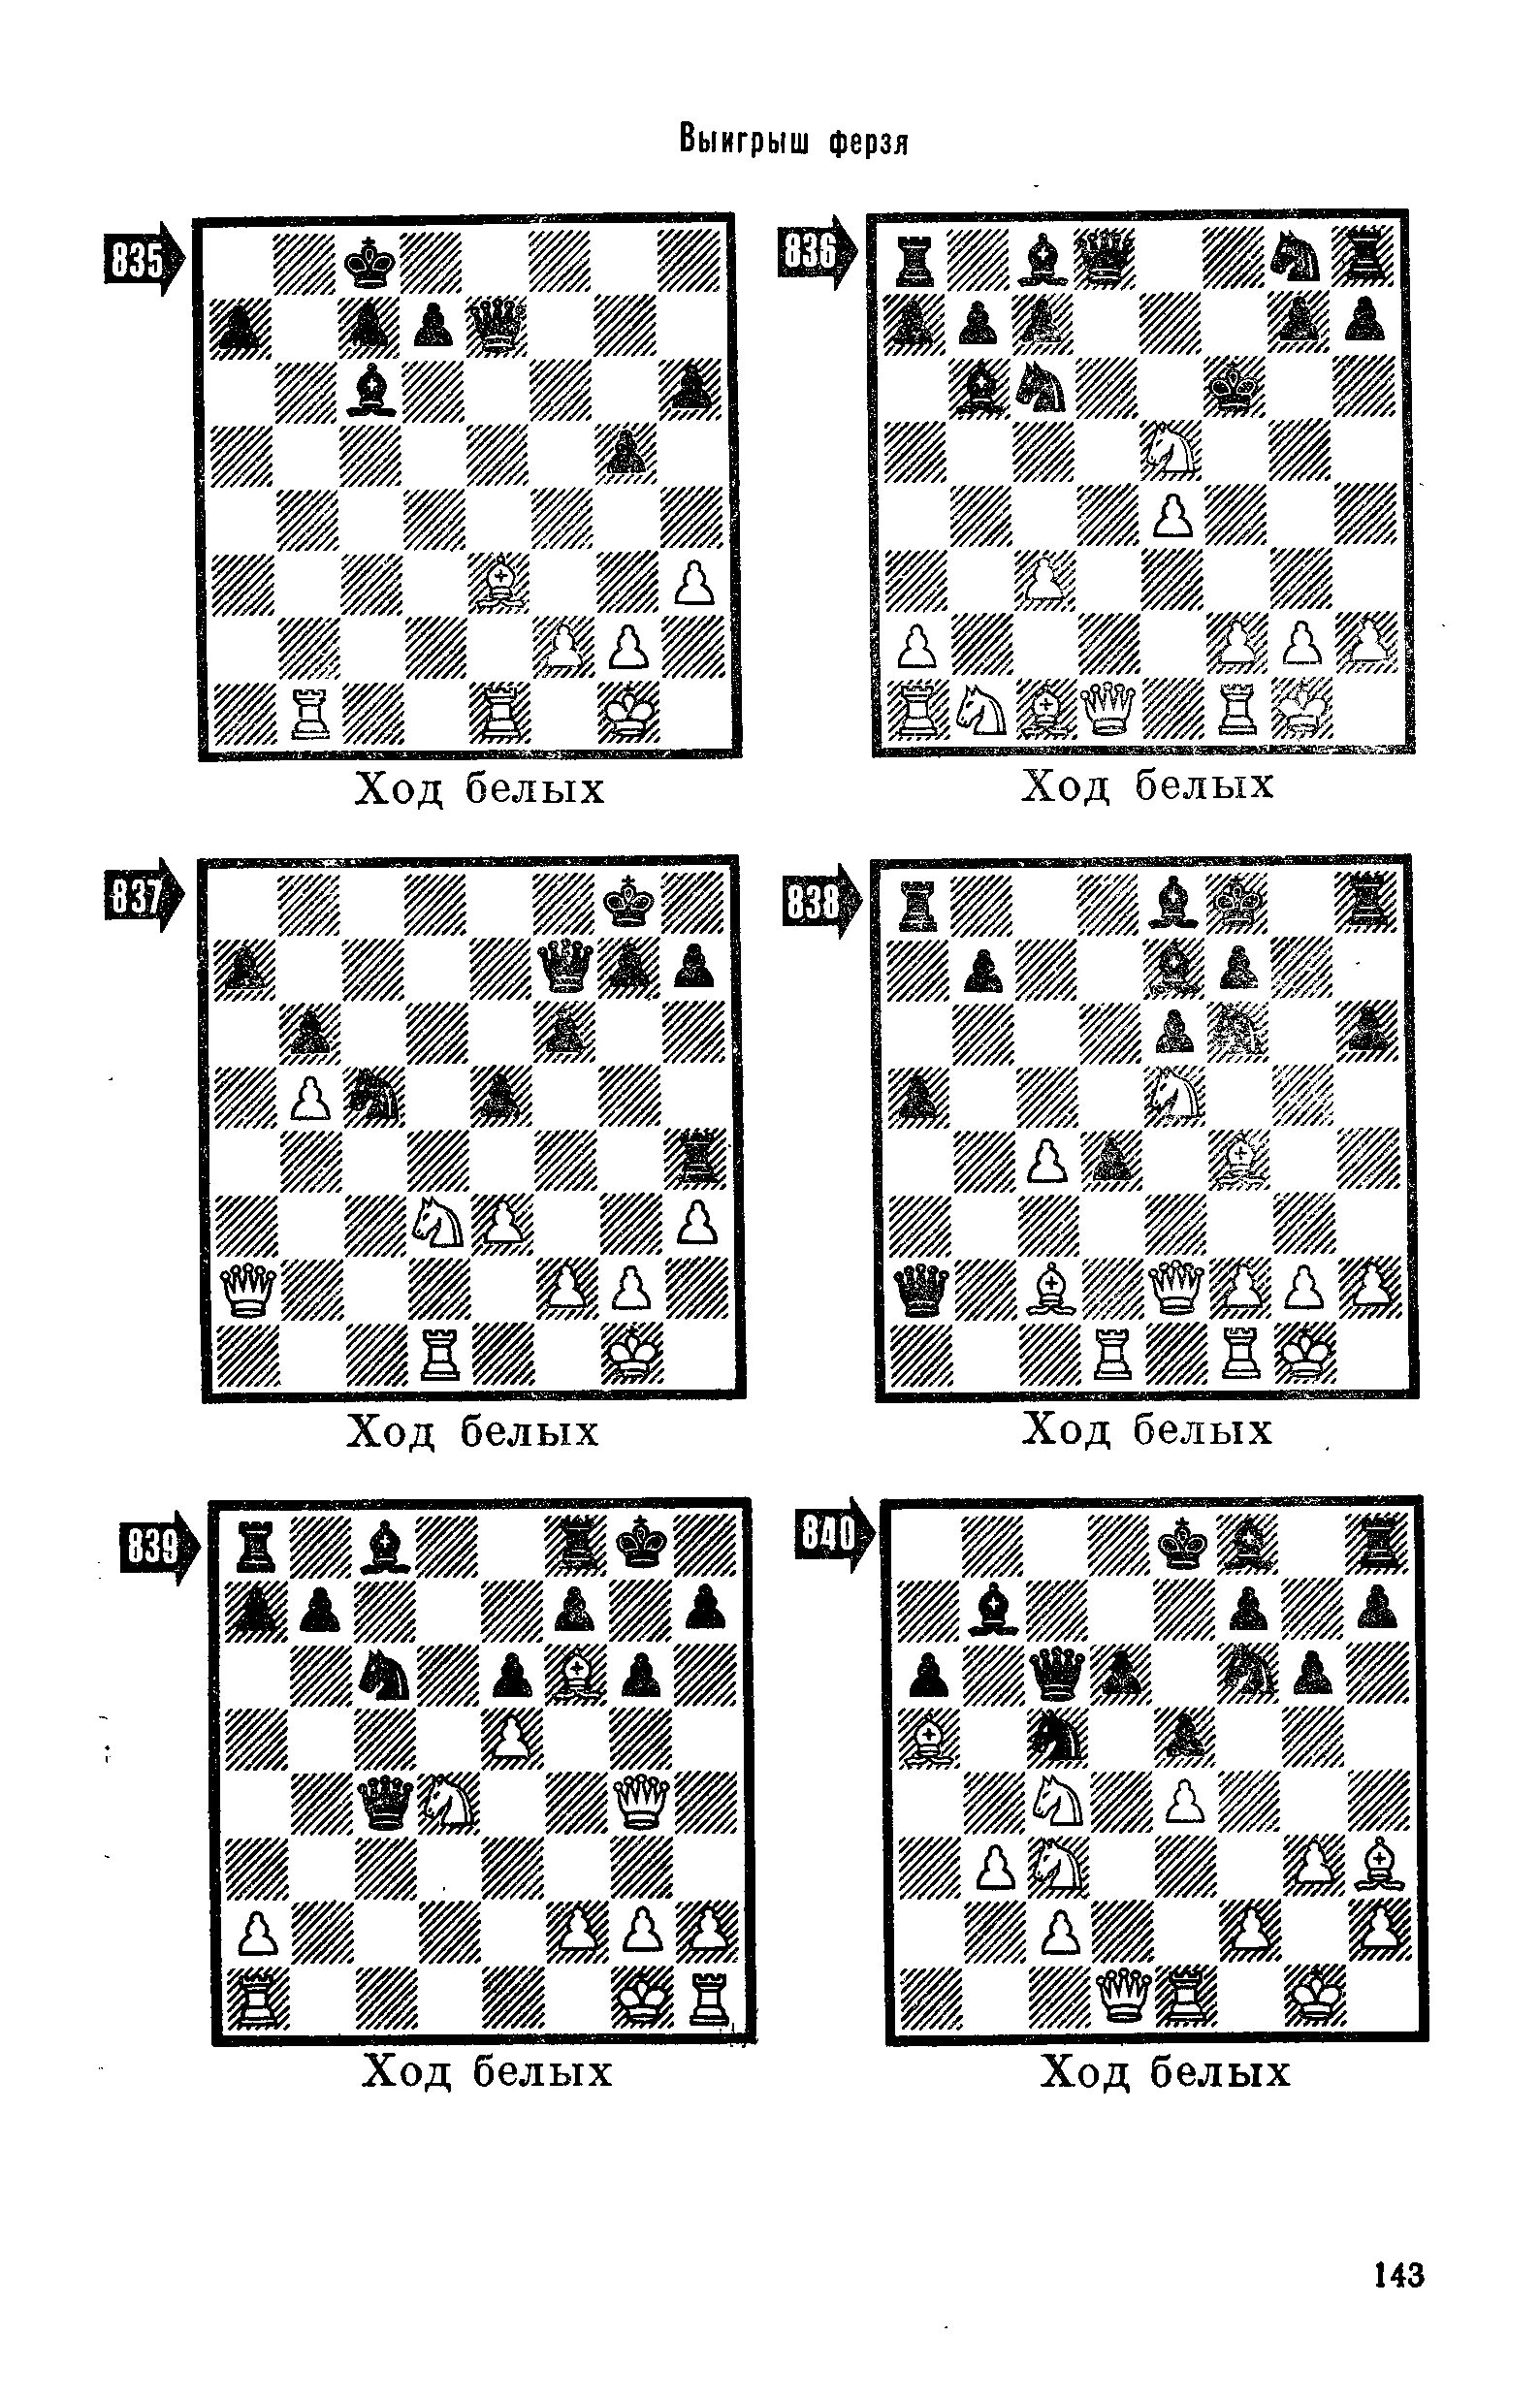 Задачи по шахматам. Мат за 2 хода в шахматах. Шахматные комбинации сложные. Шахматные ходы комбинации для начинающих.